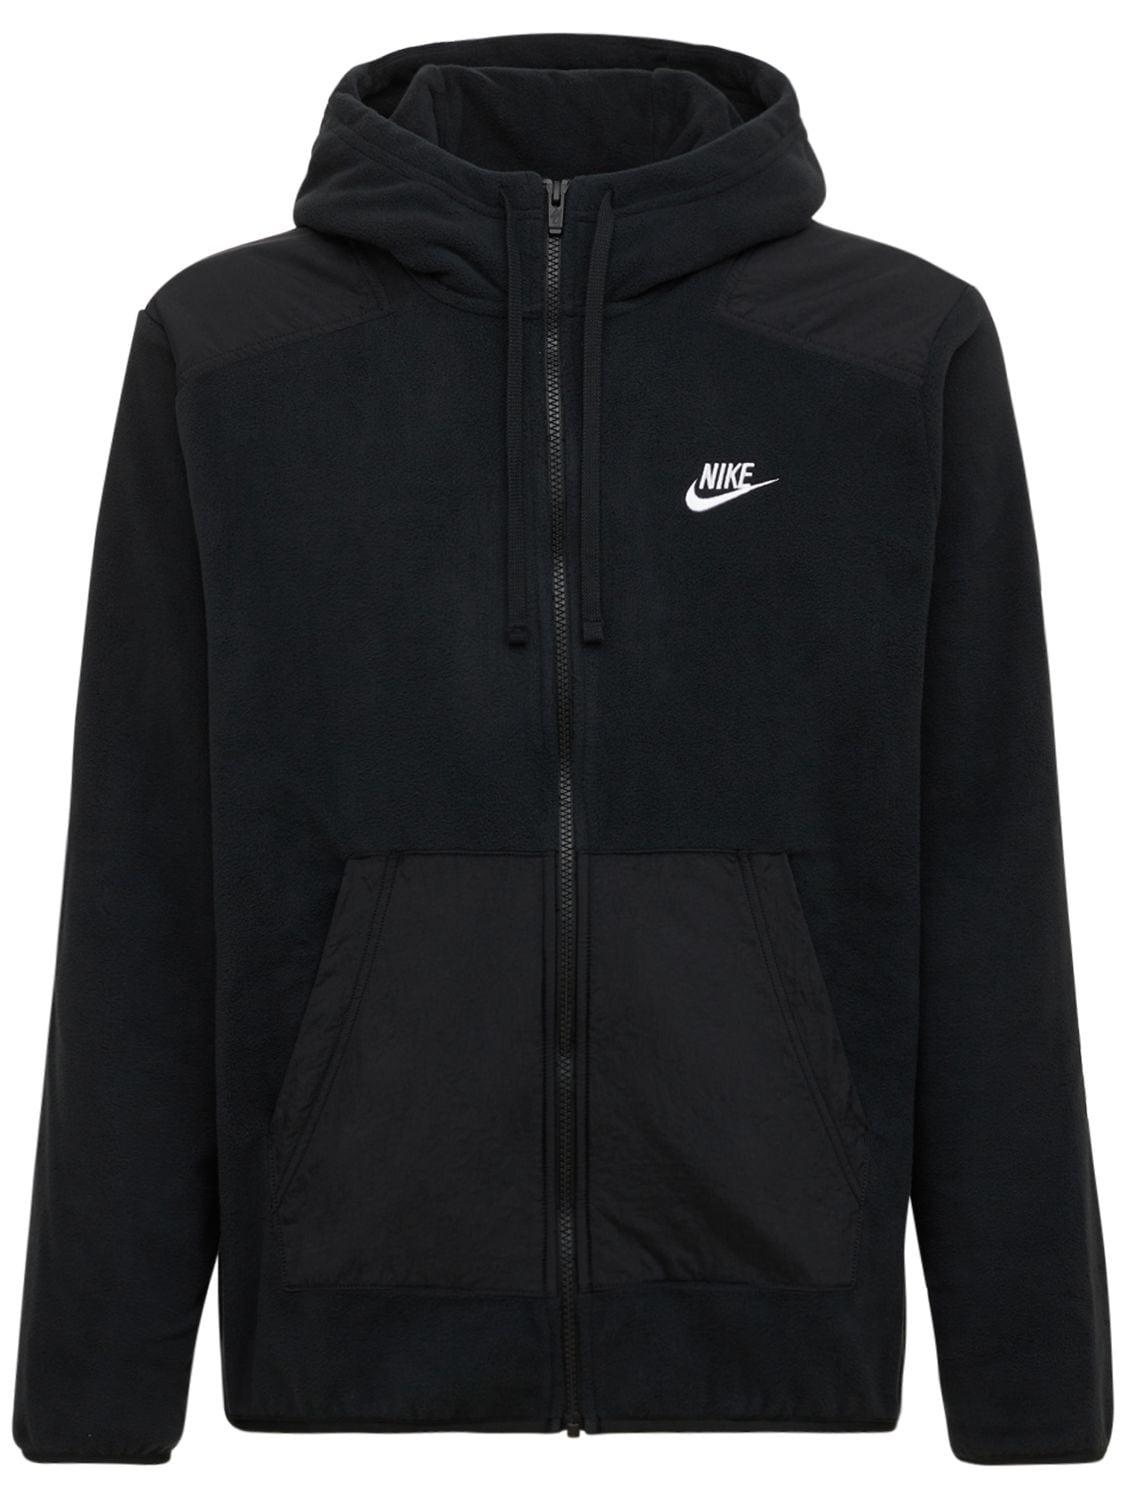 Nike Polar Fleece Tech Zip Hoodie in Black/White (Black) for Men | Lyst